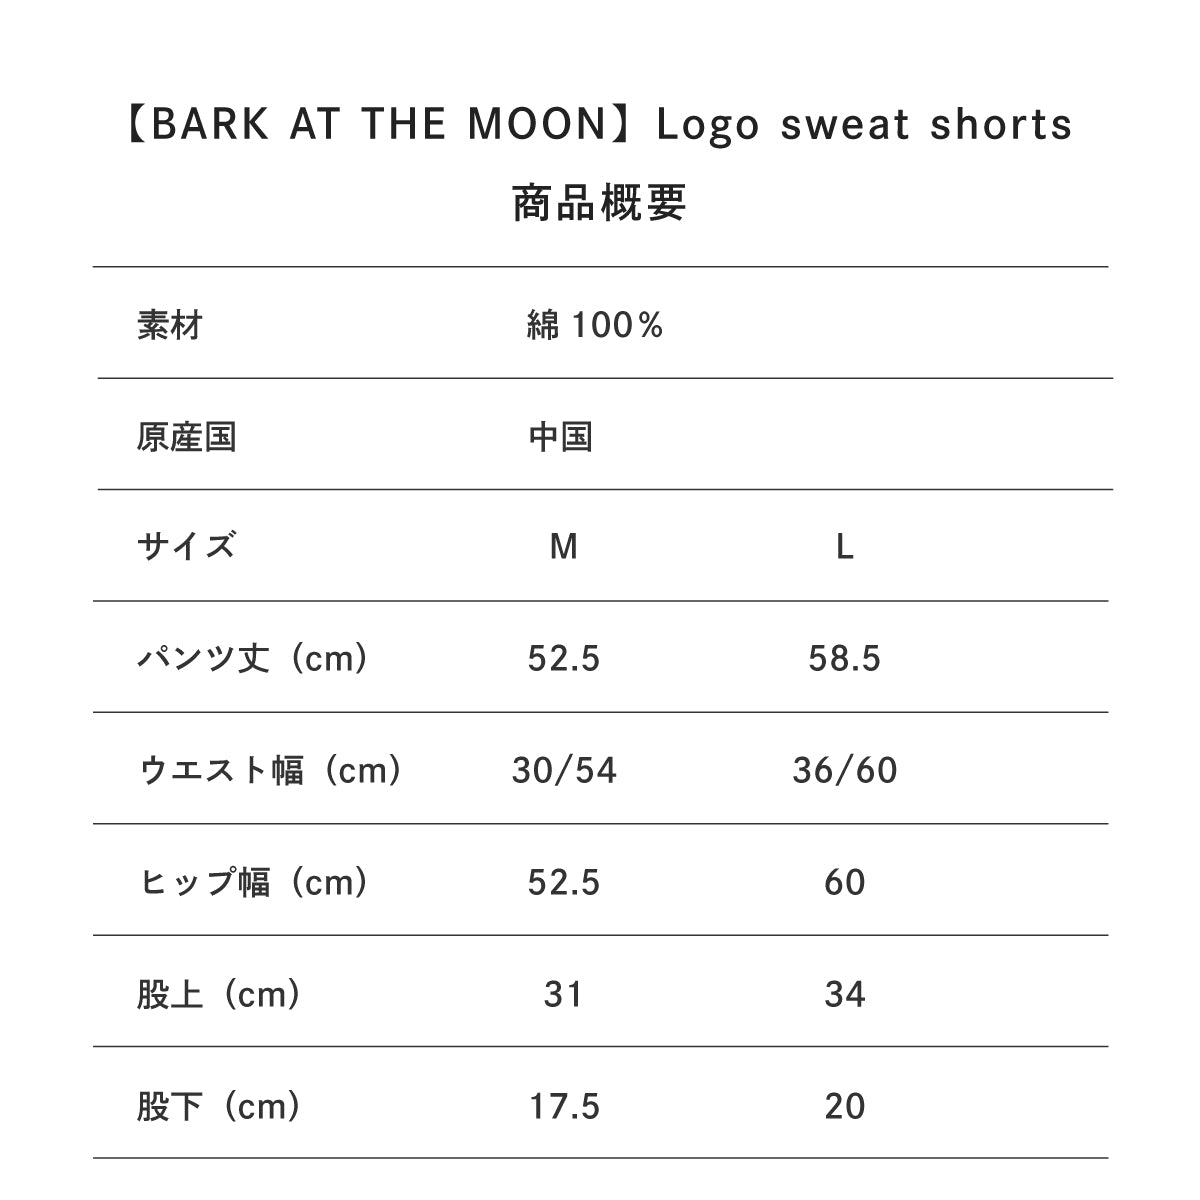 Logo sweat shorts